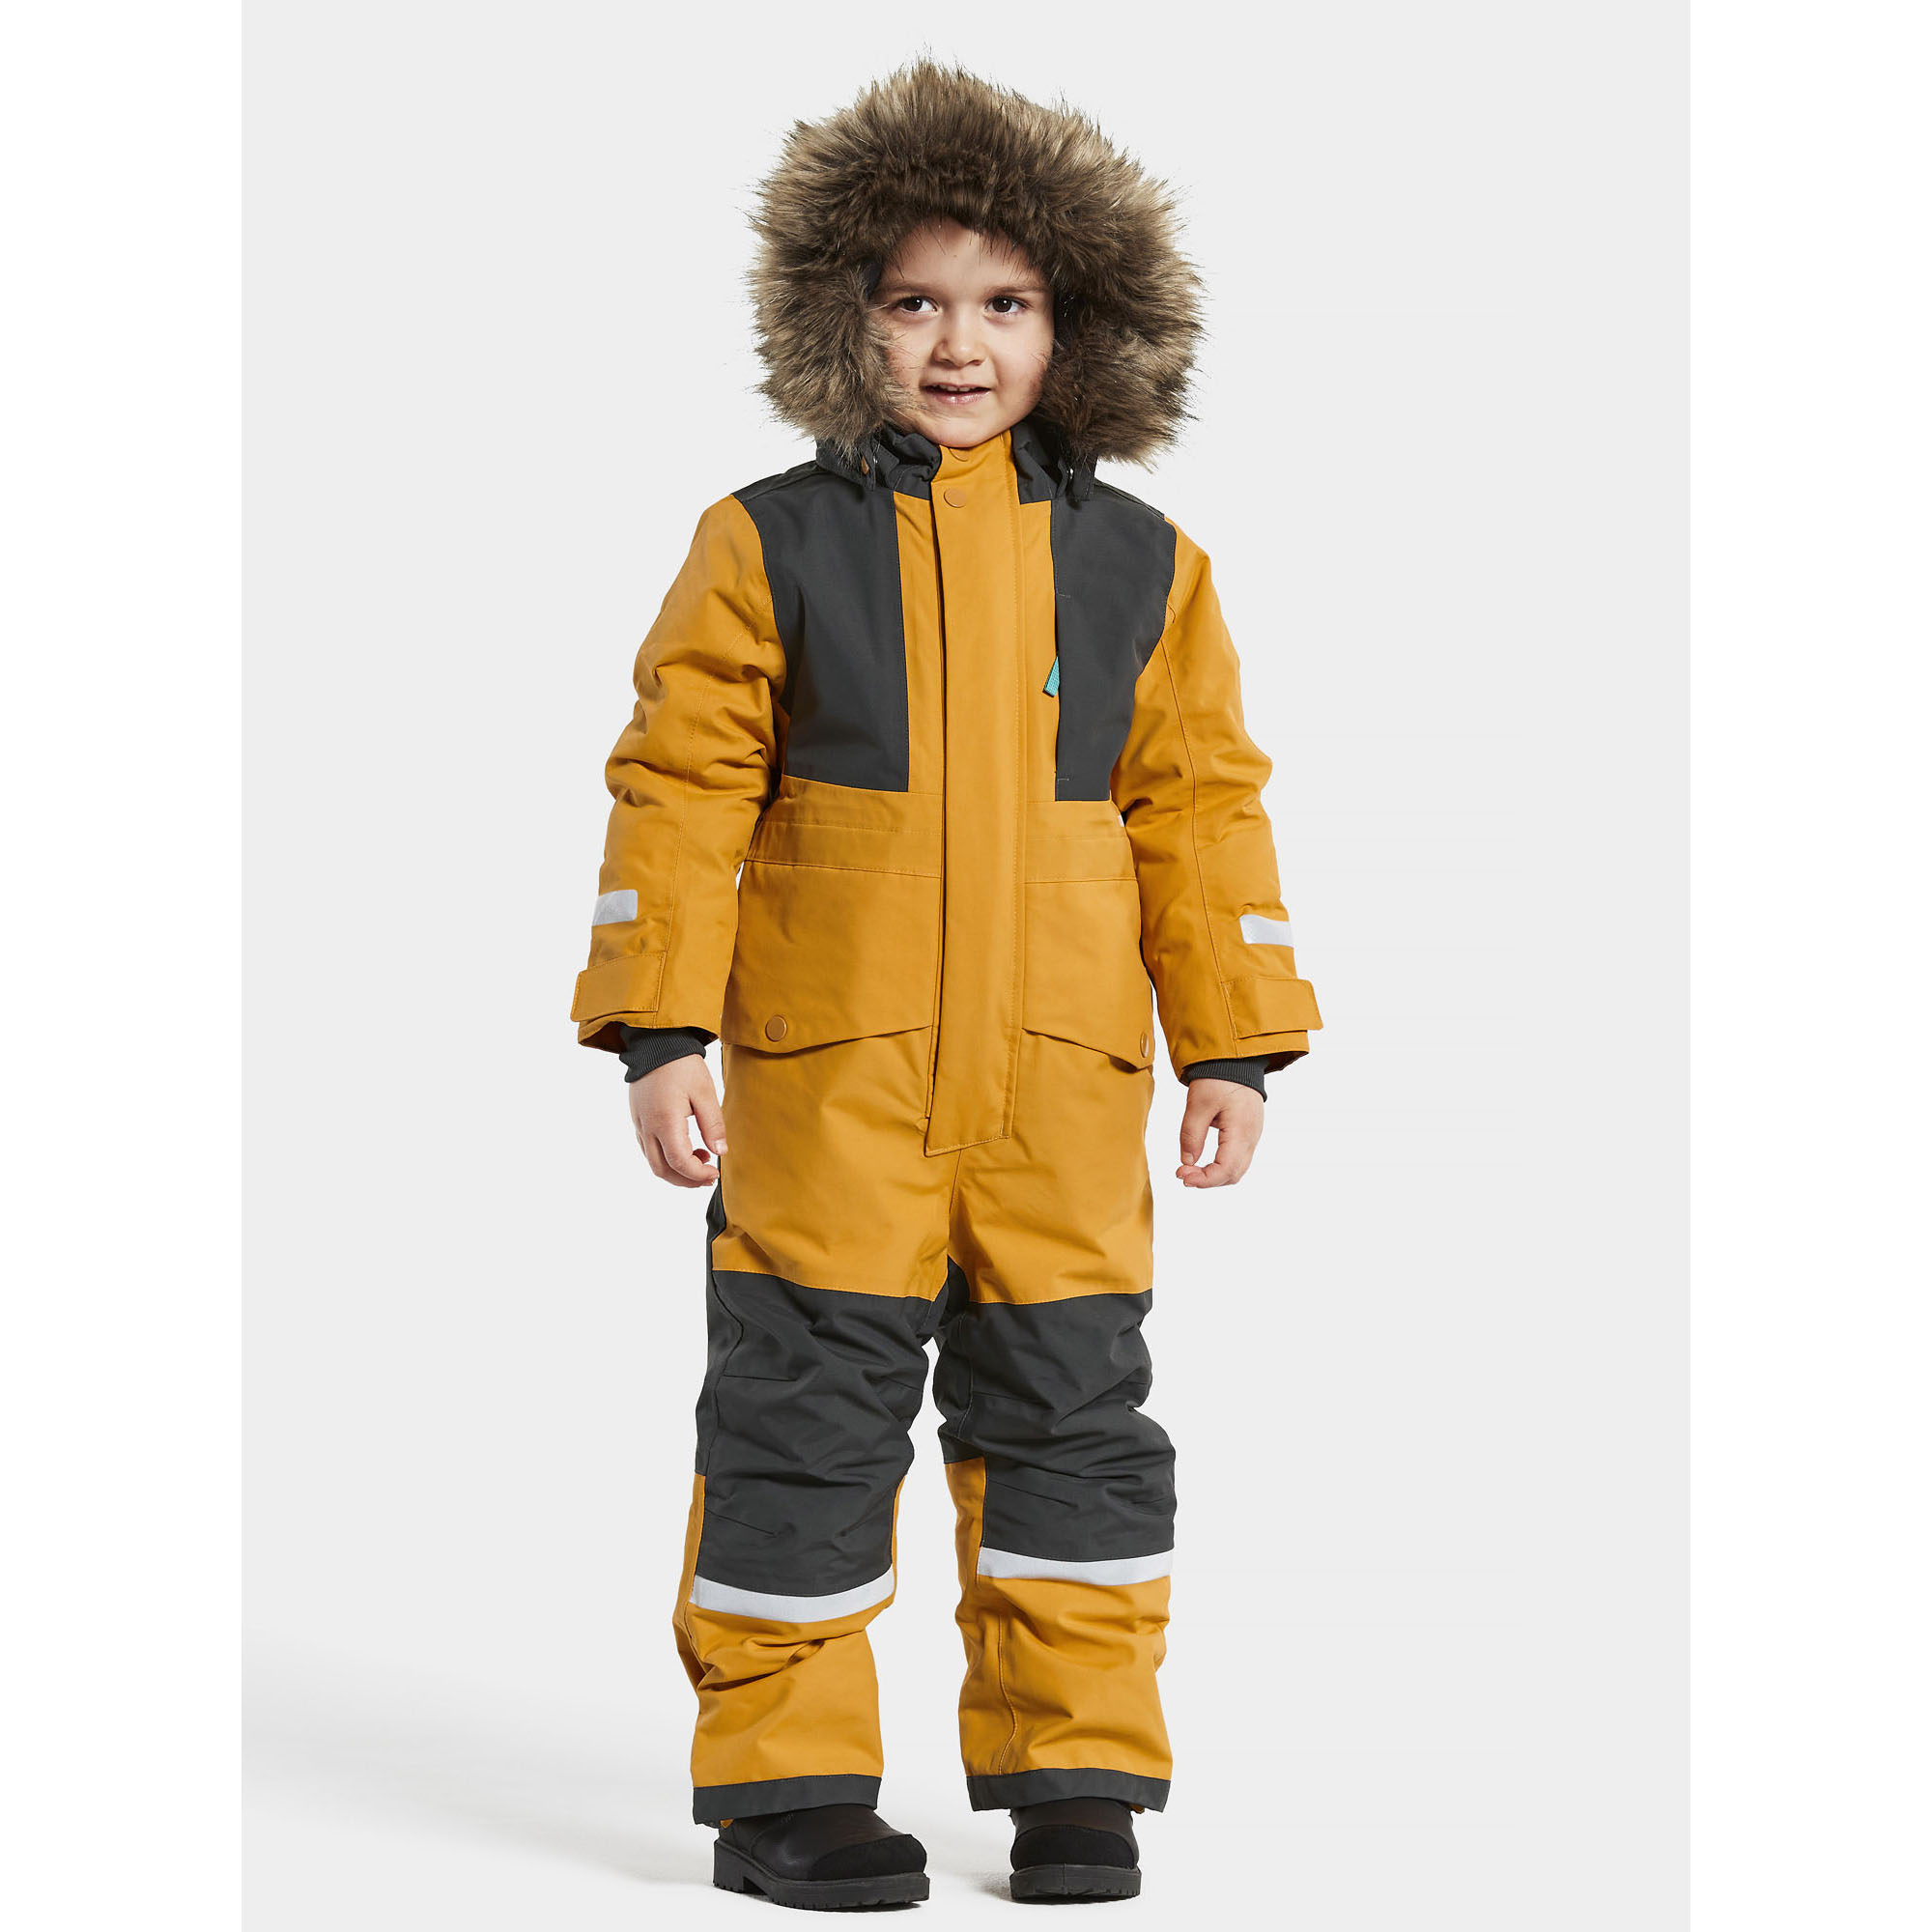 Didriksons Bjornen 5 Kids Waterproof Insulated All-in-One Snowsuit | eBay